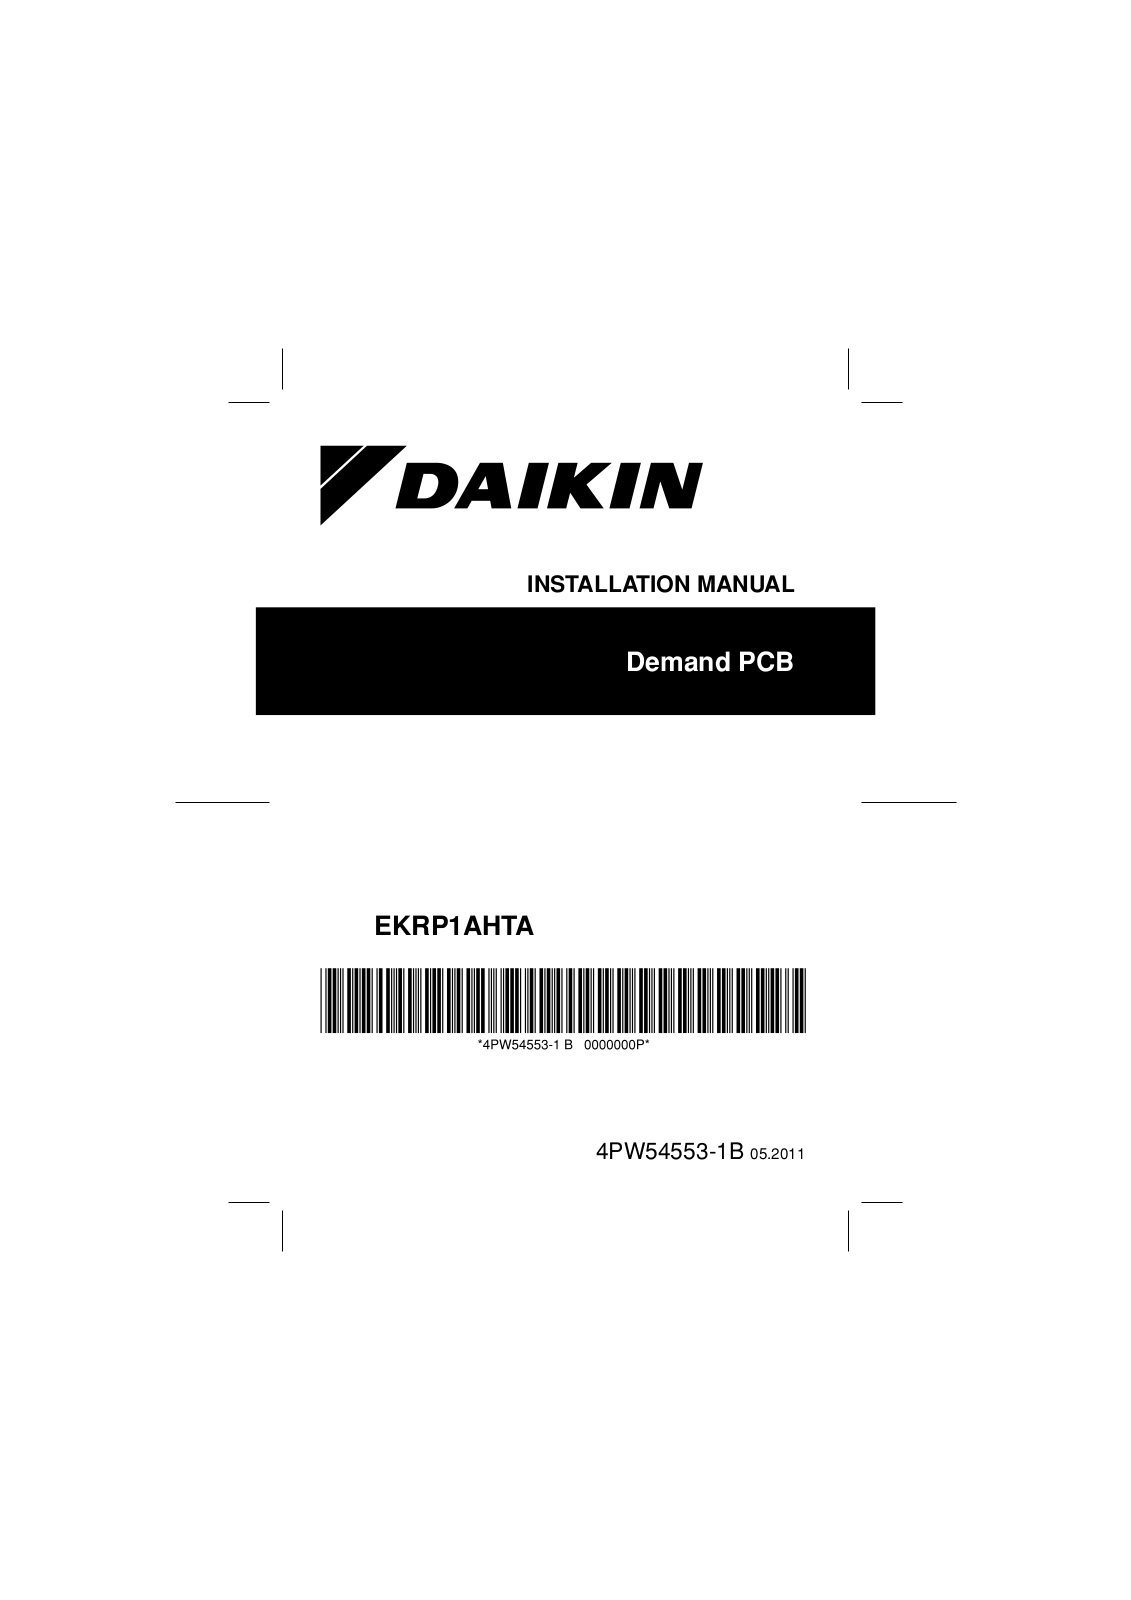 Daikin EKRP1AHTA Installation manuals